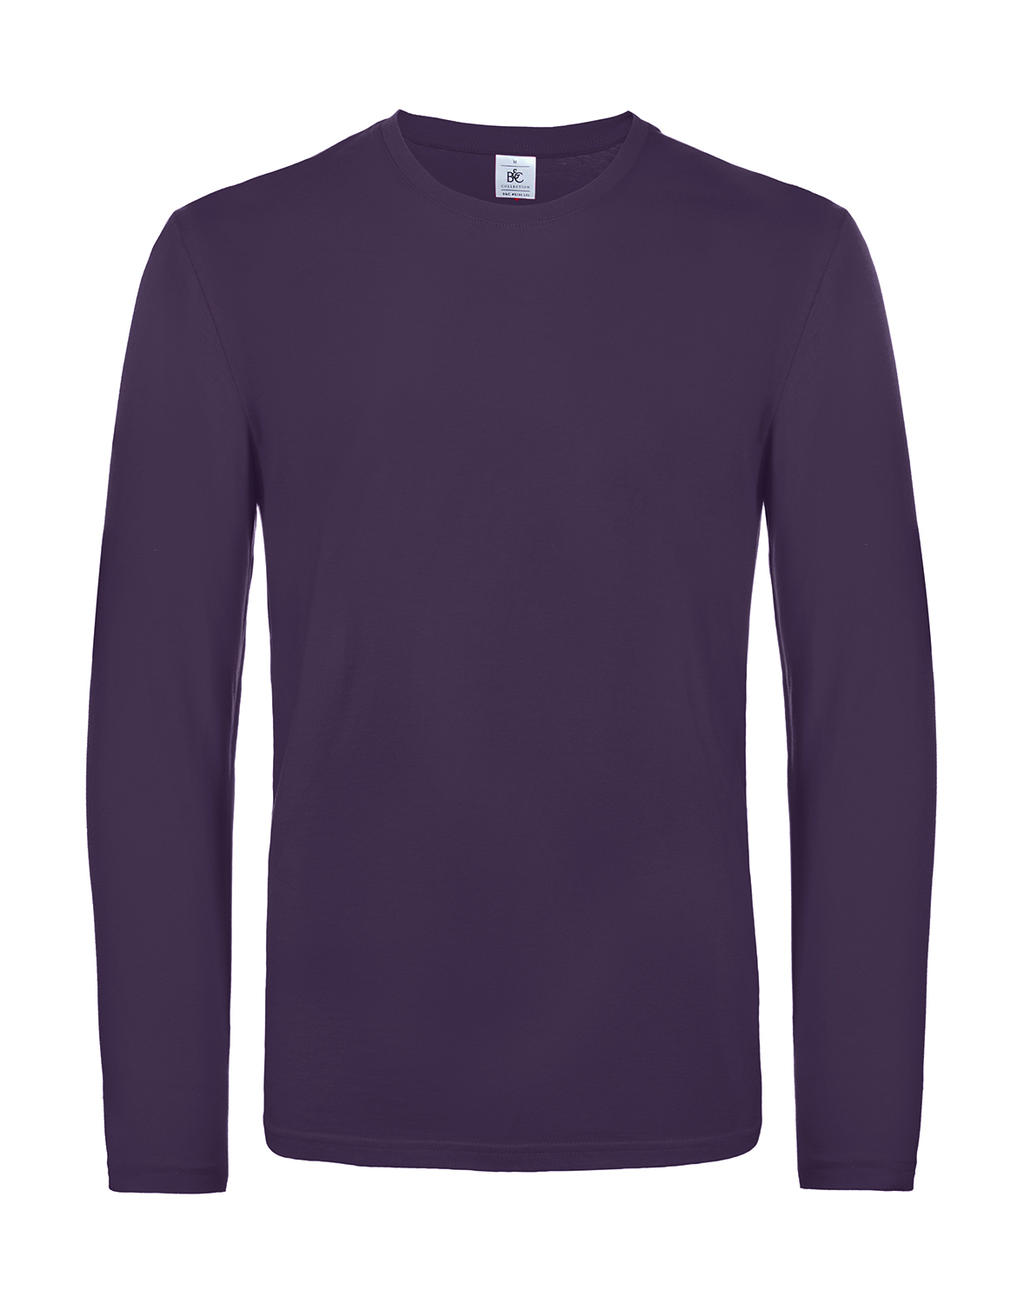 Tričko s dlhými rukávmi #E190 - urban purple